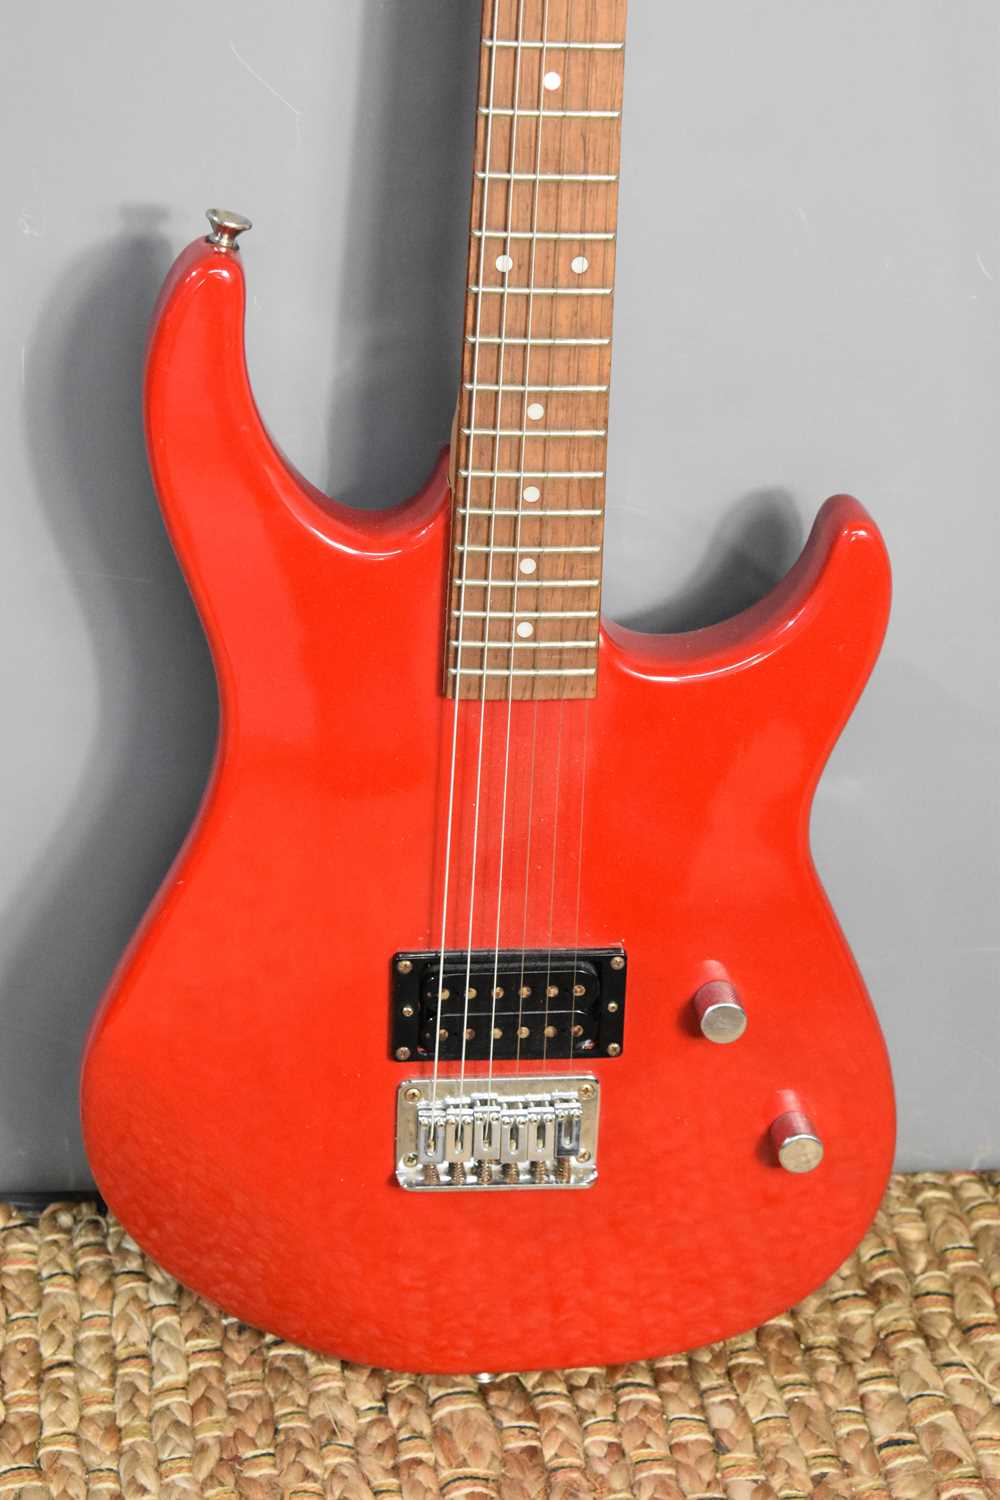 A Peavey Raptor Junior Electric Guitar in red. - Image 4 of 4